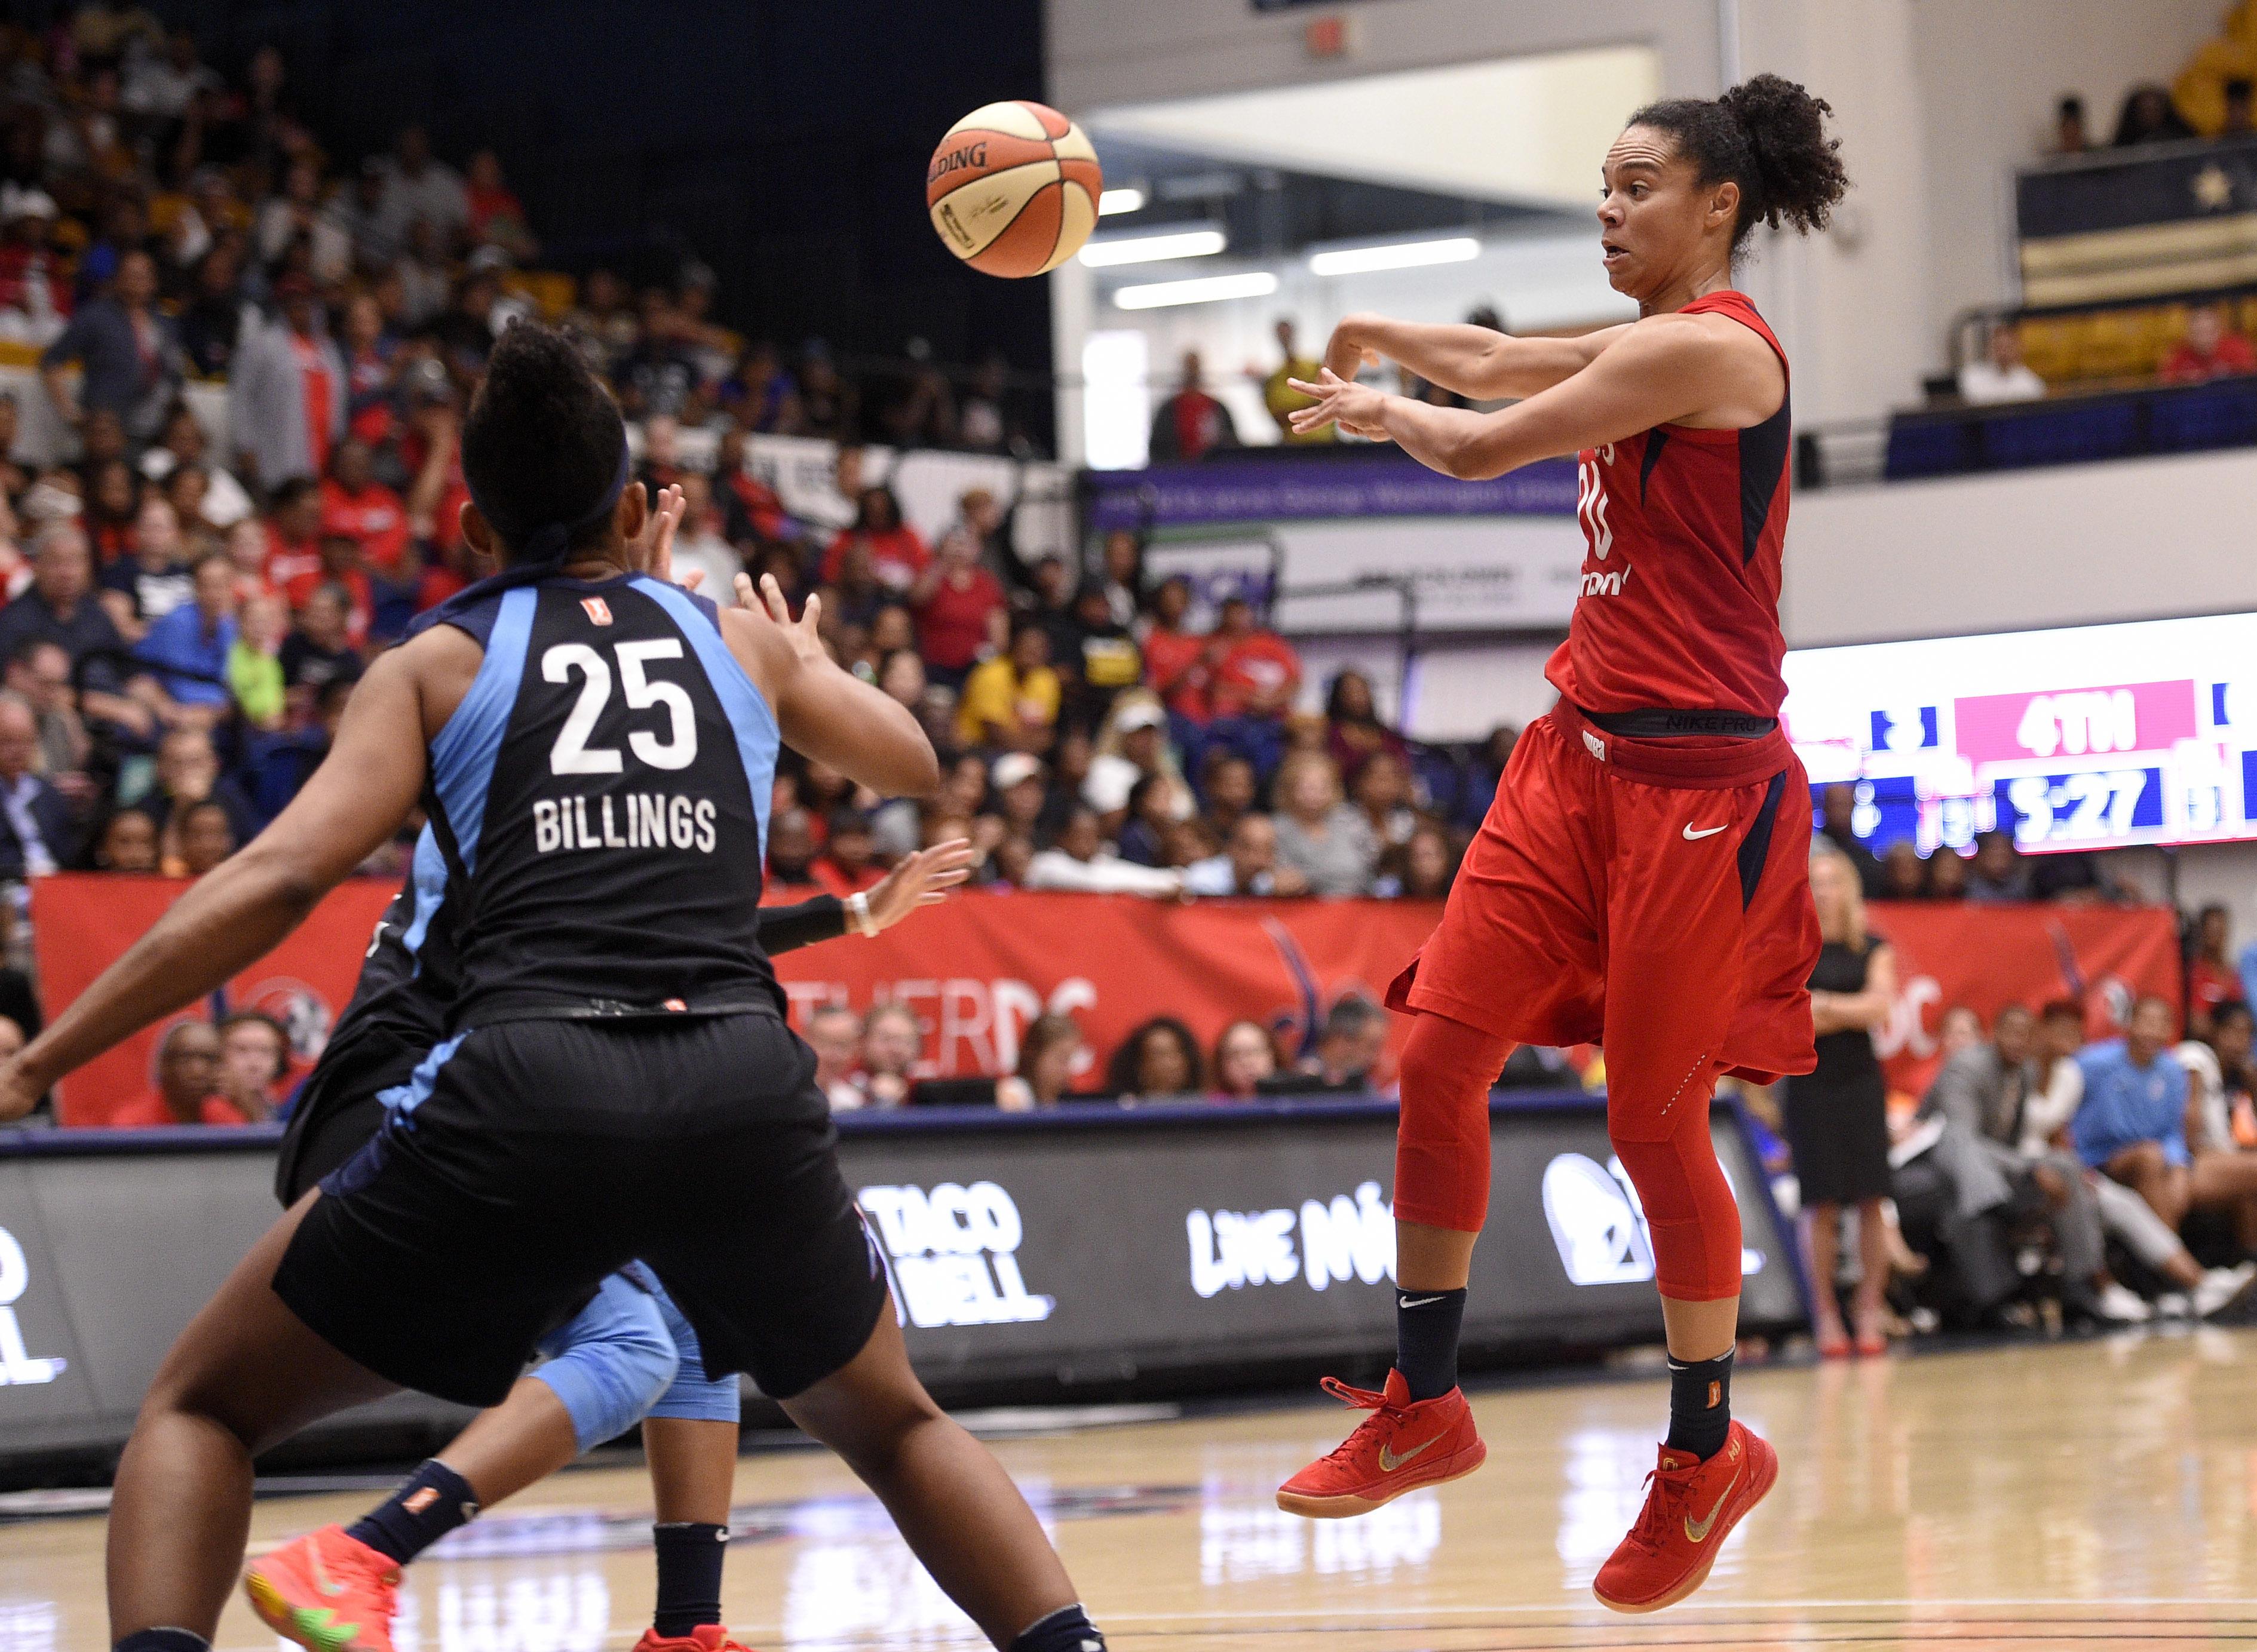 WNBA Preview: Mystics face the Dream in preseason opener - Bullets Forever